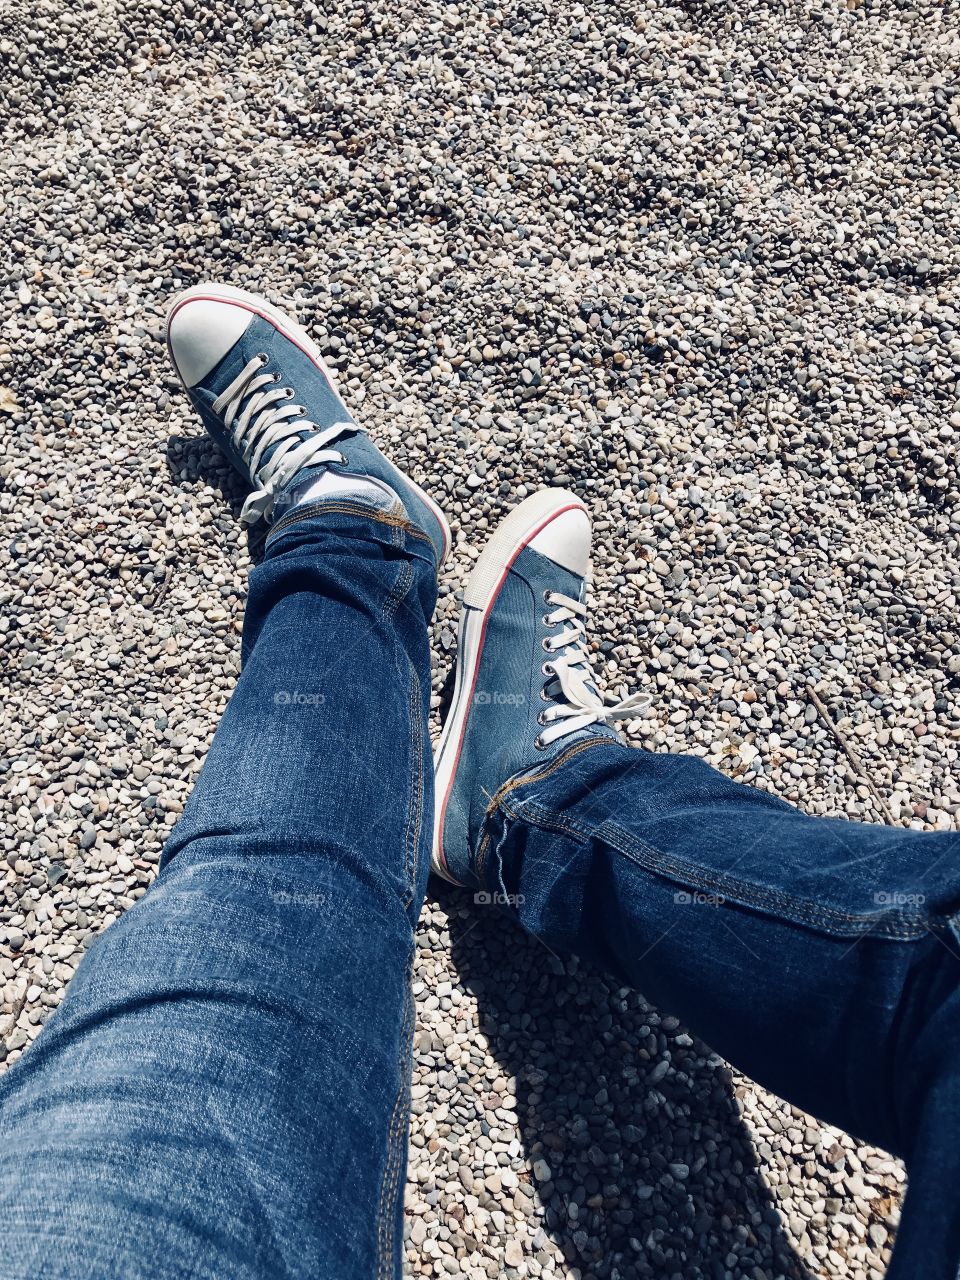 Foots blue jeans 